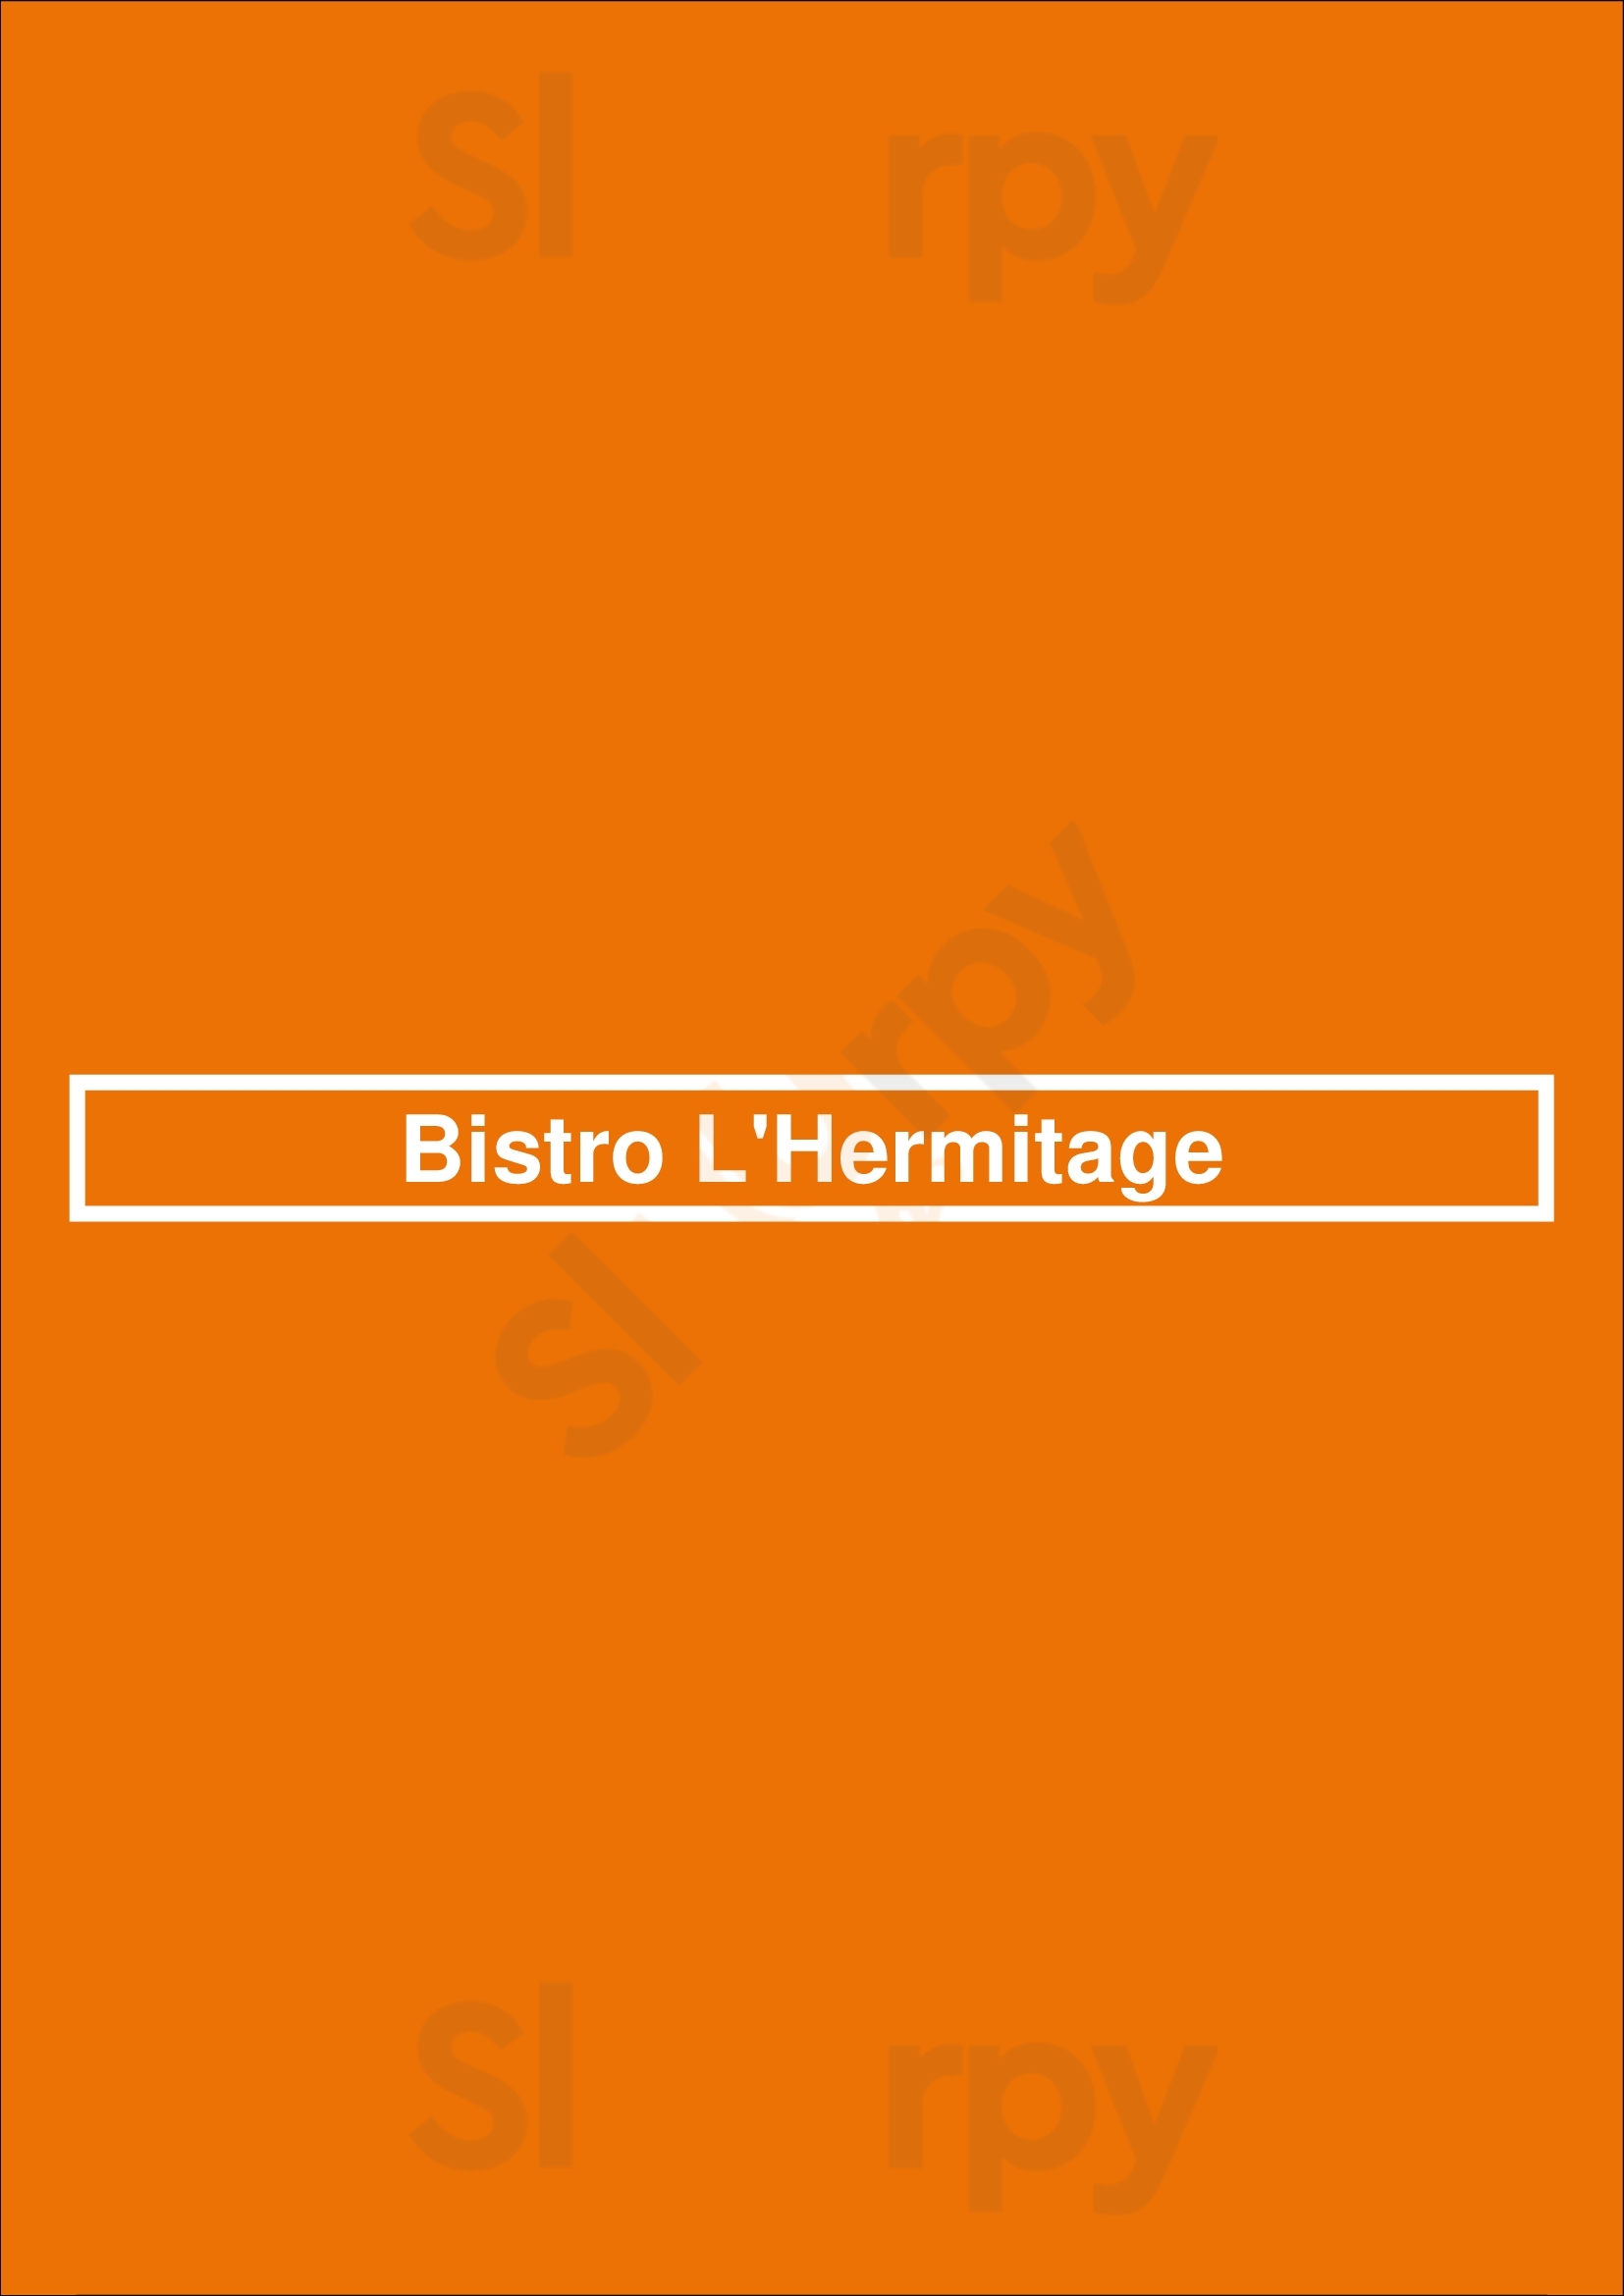 Bistro L'hermitage Woodbridge Menu - 1